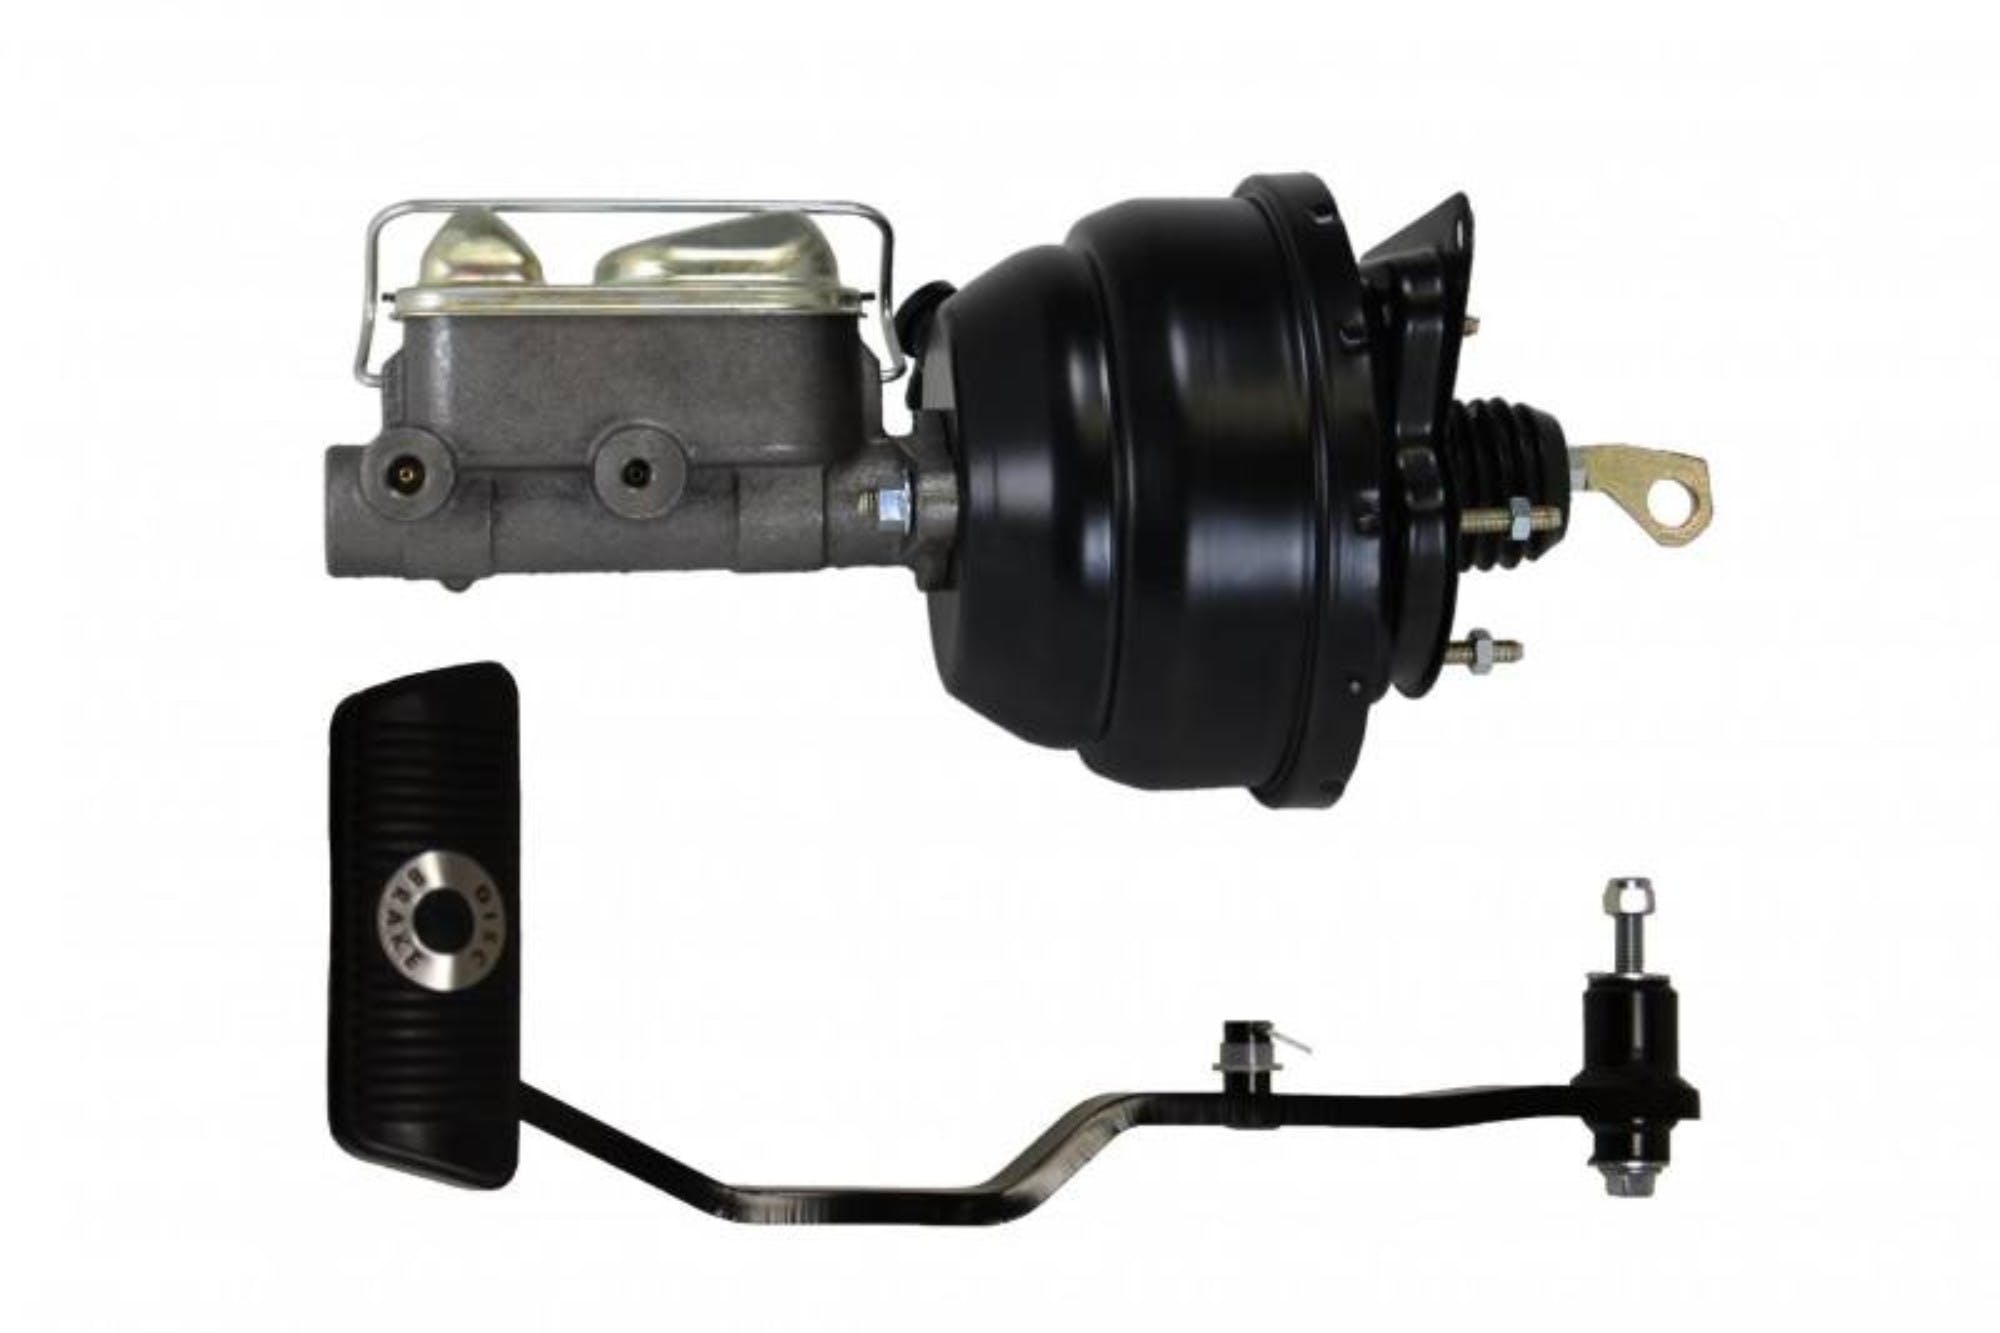 LEED Brakes FC0021HK Hydraulic Kit - Power Brakes - With autotrans